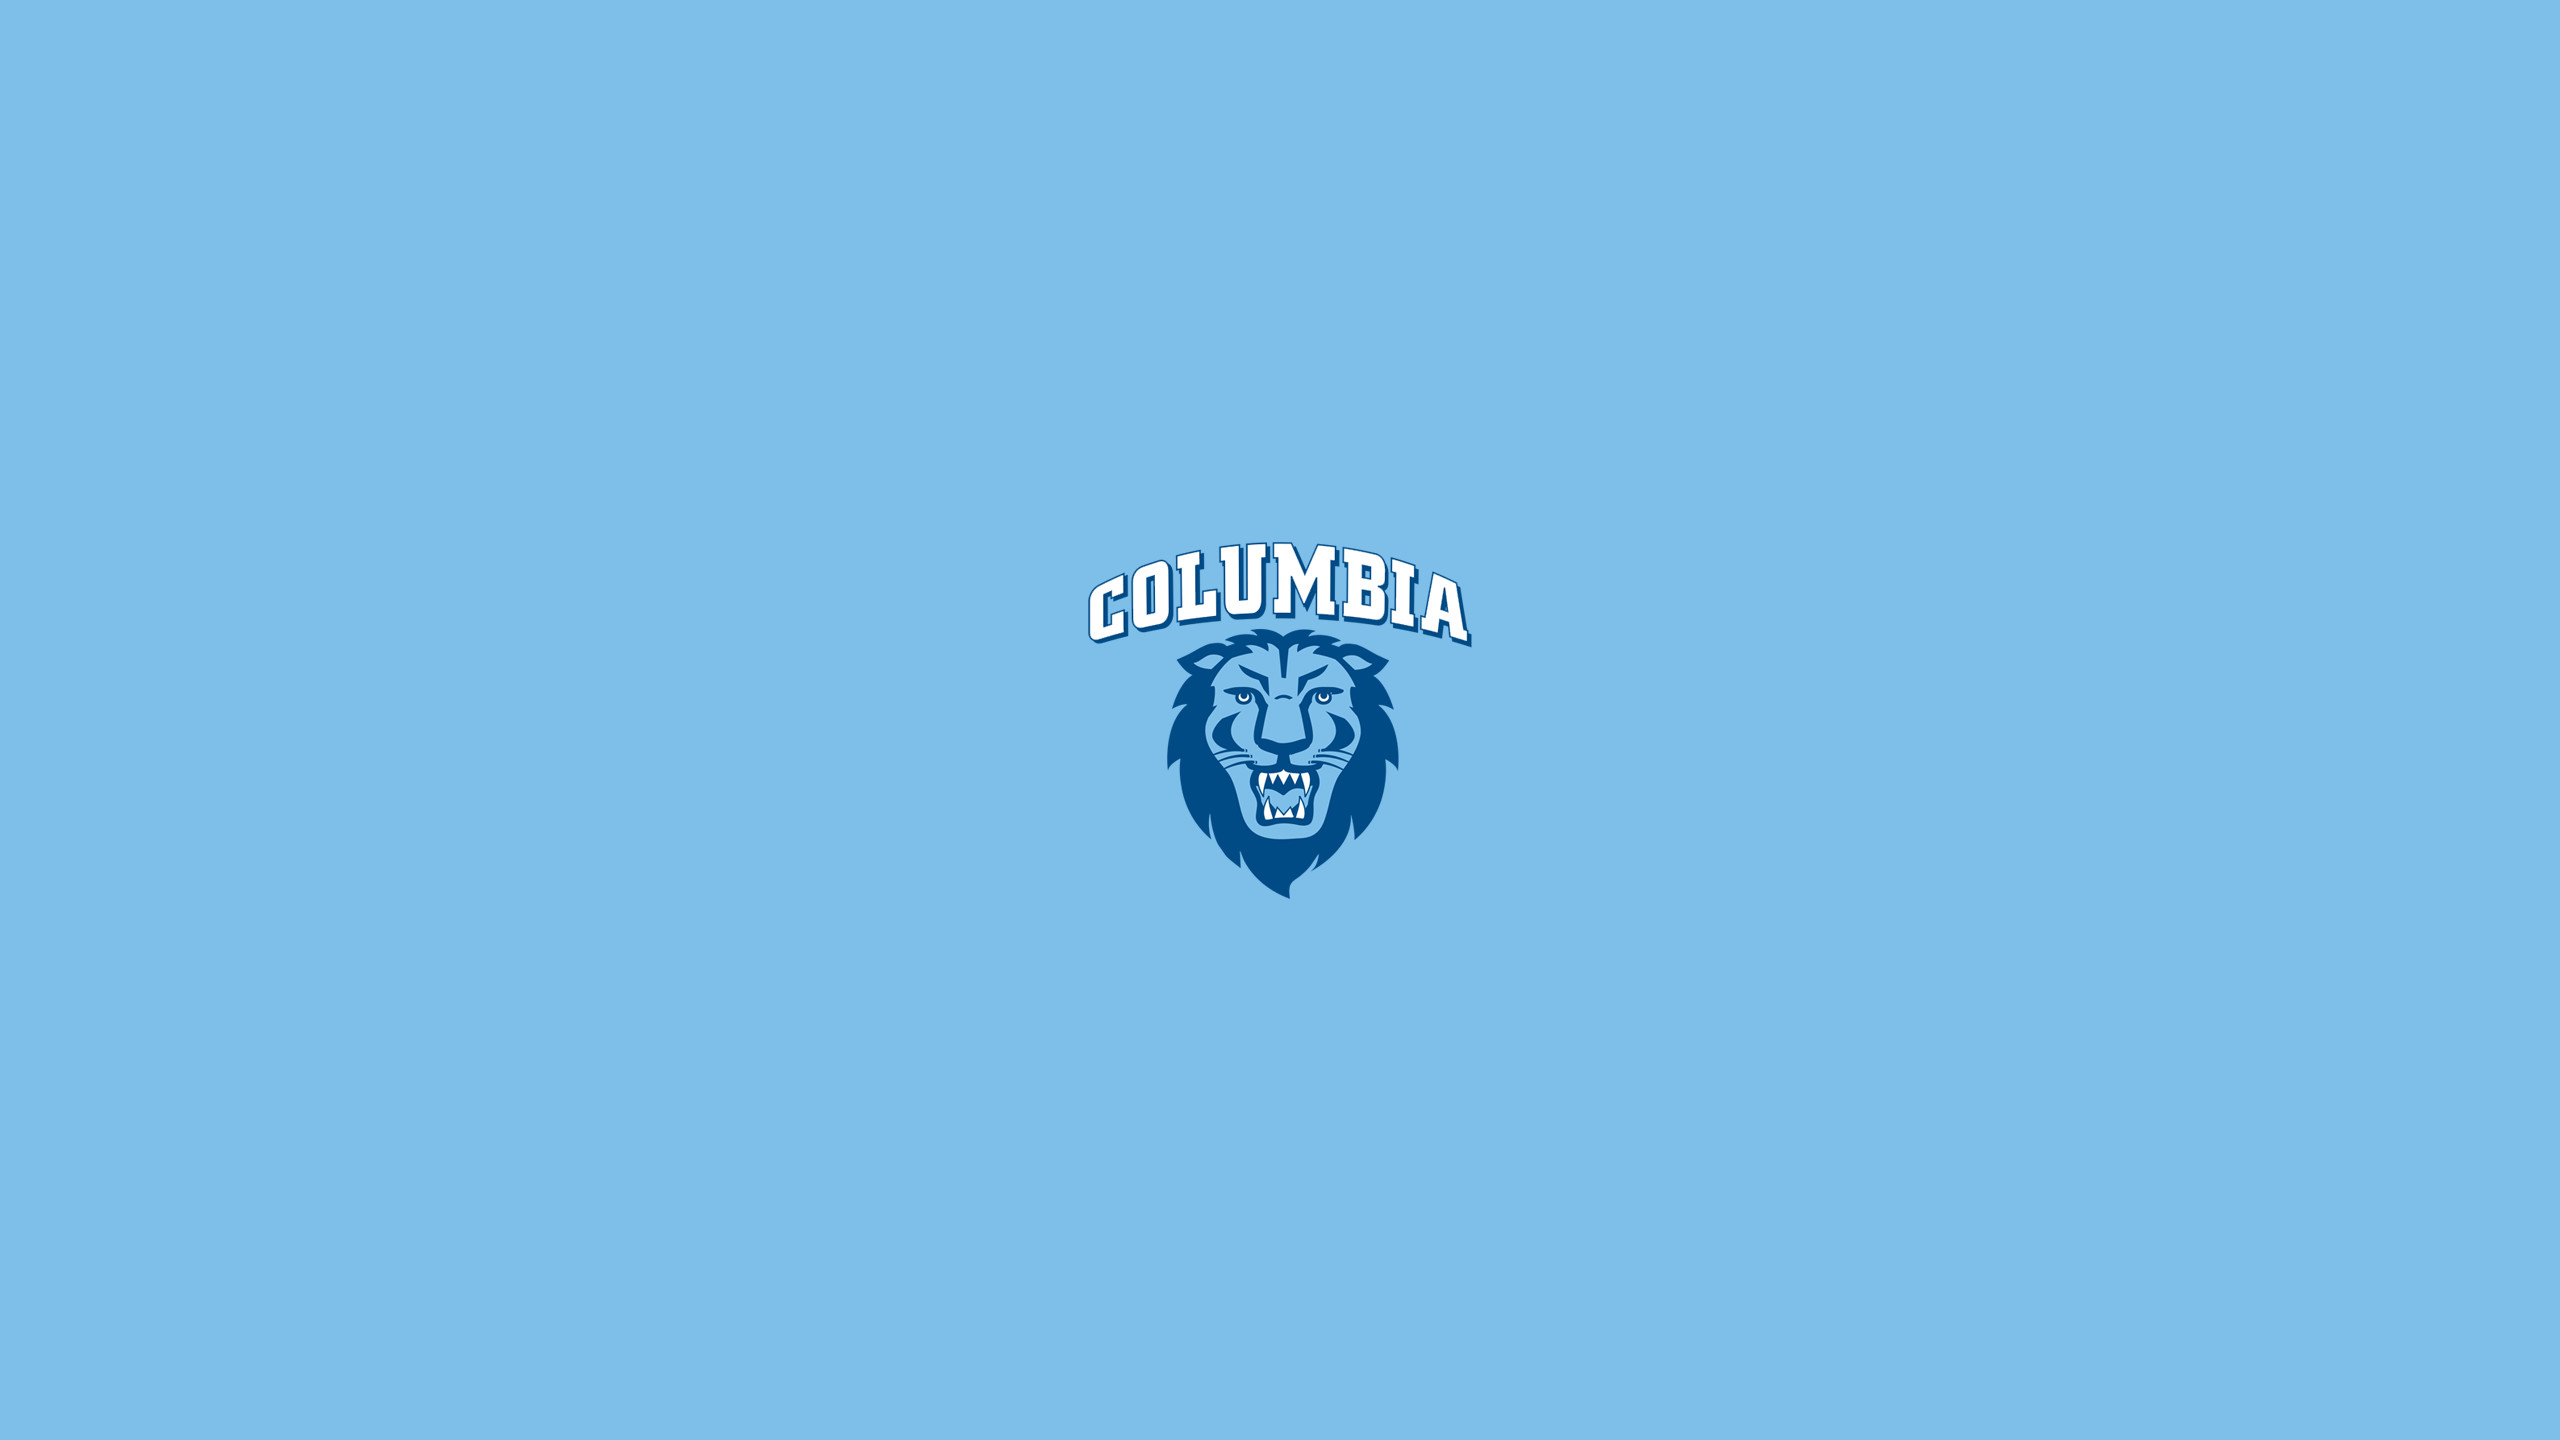 columbia university wallpaper,azul,fuente,texto,emblema,cielo